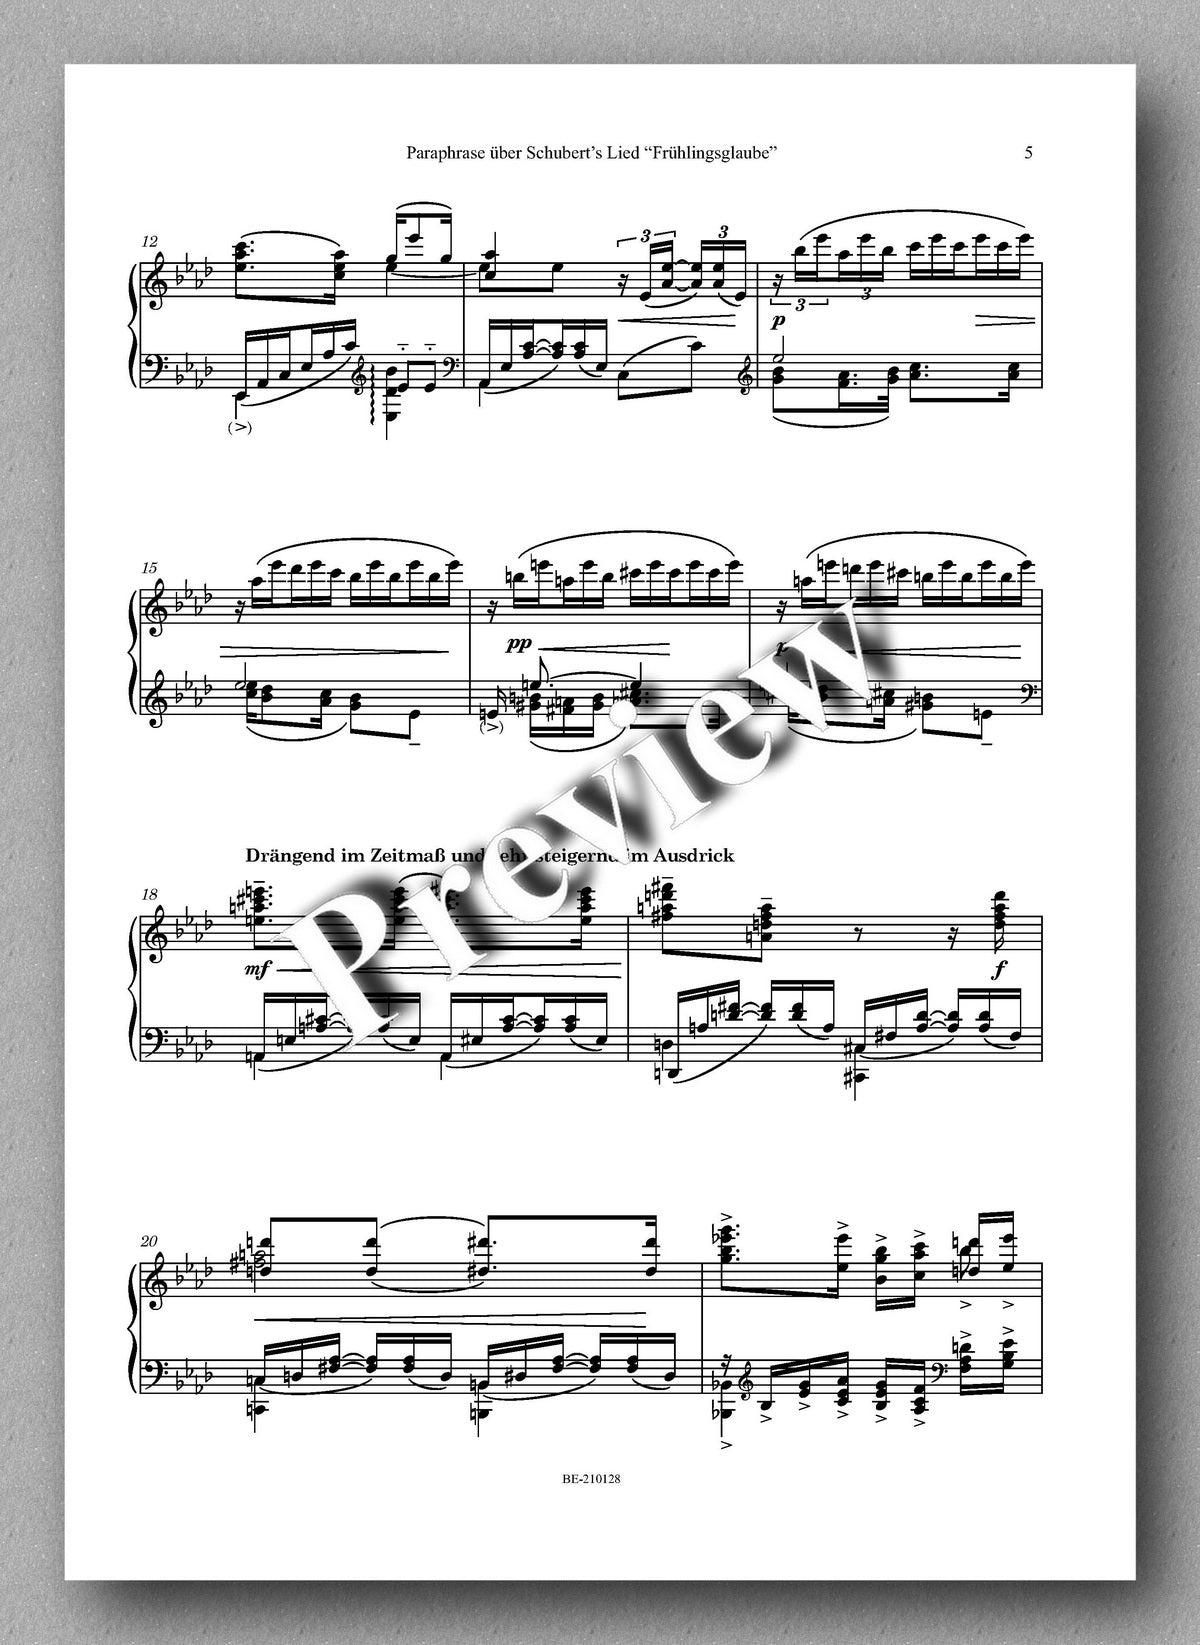 Rebay, Klavier No. 9, Paraphrase über Schubert’s Lied “Frühlingsglaube” - music score 2